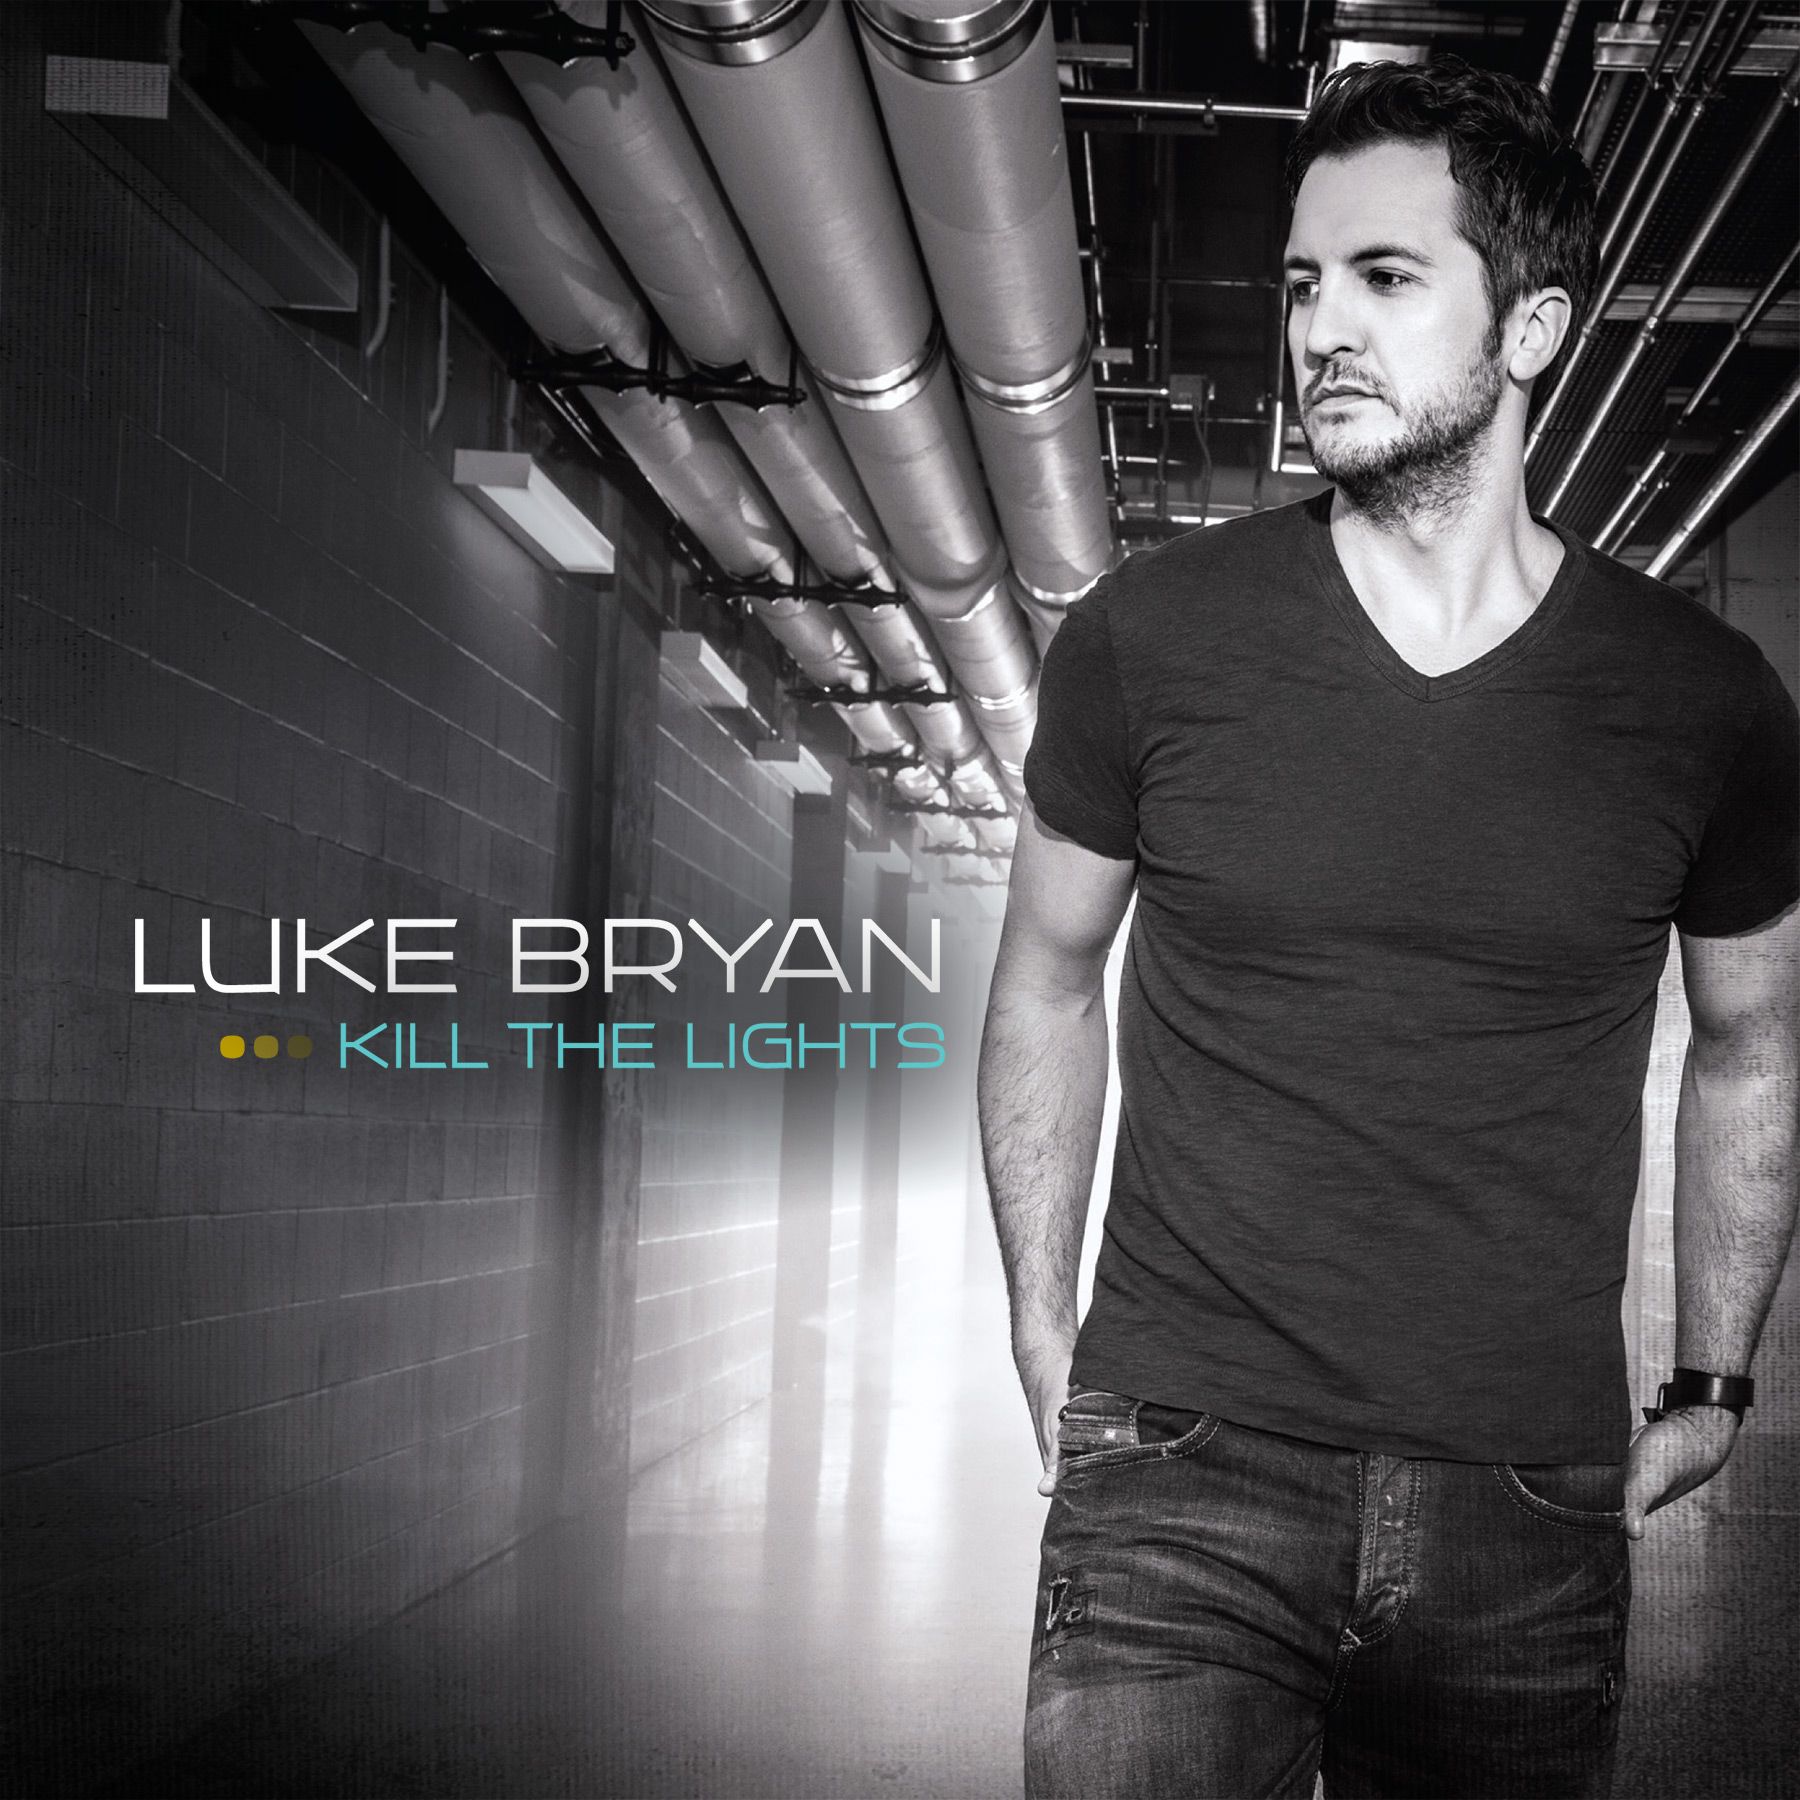 LUKE BRYAN ANNOUNCES NEW ALBUM “Kill The Lights”